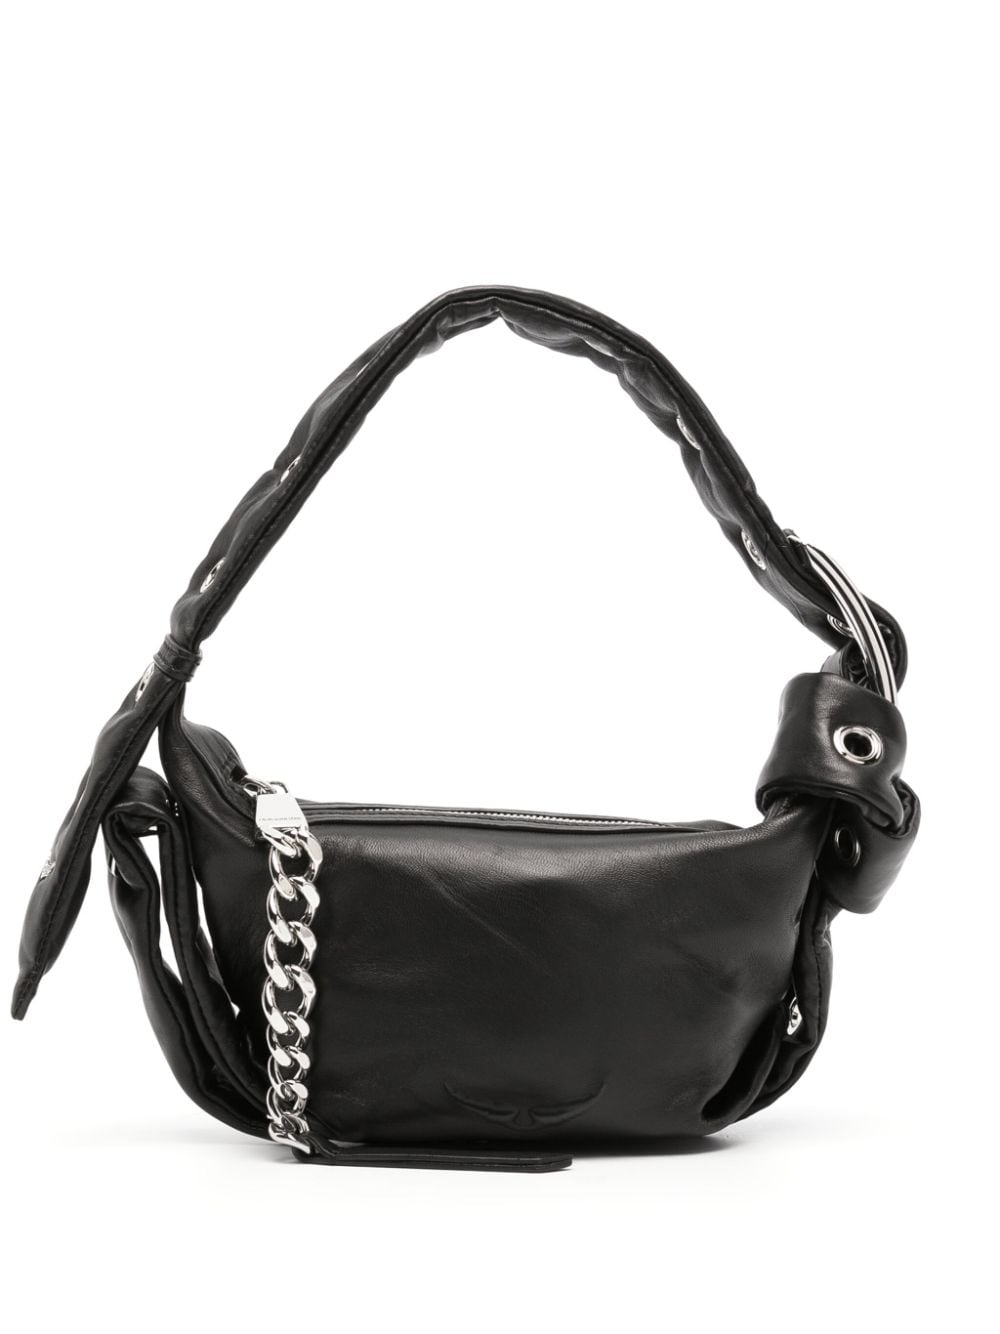 Zadig&Voltaire Le Cecilia leather shoulder bag - Black